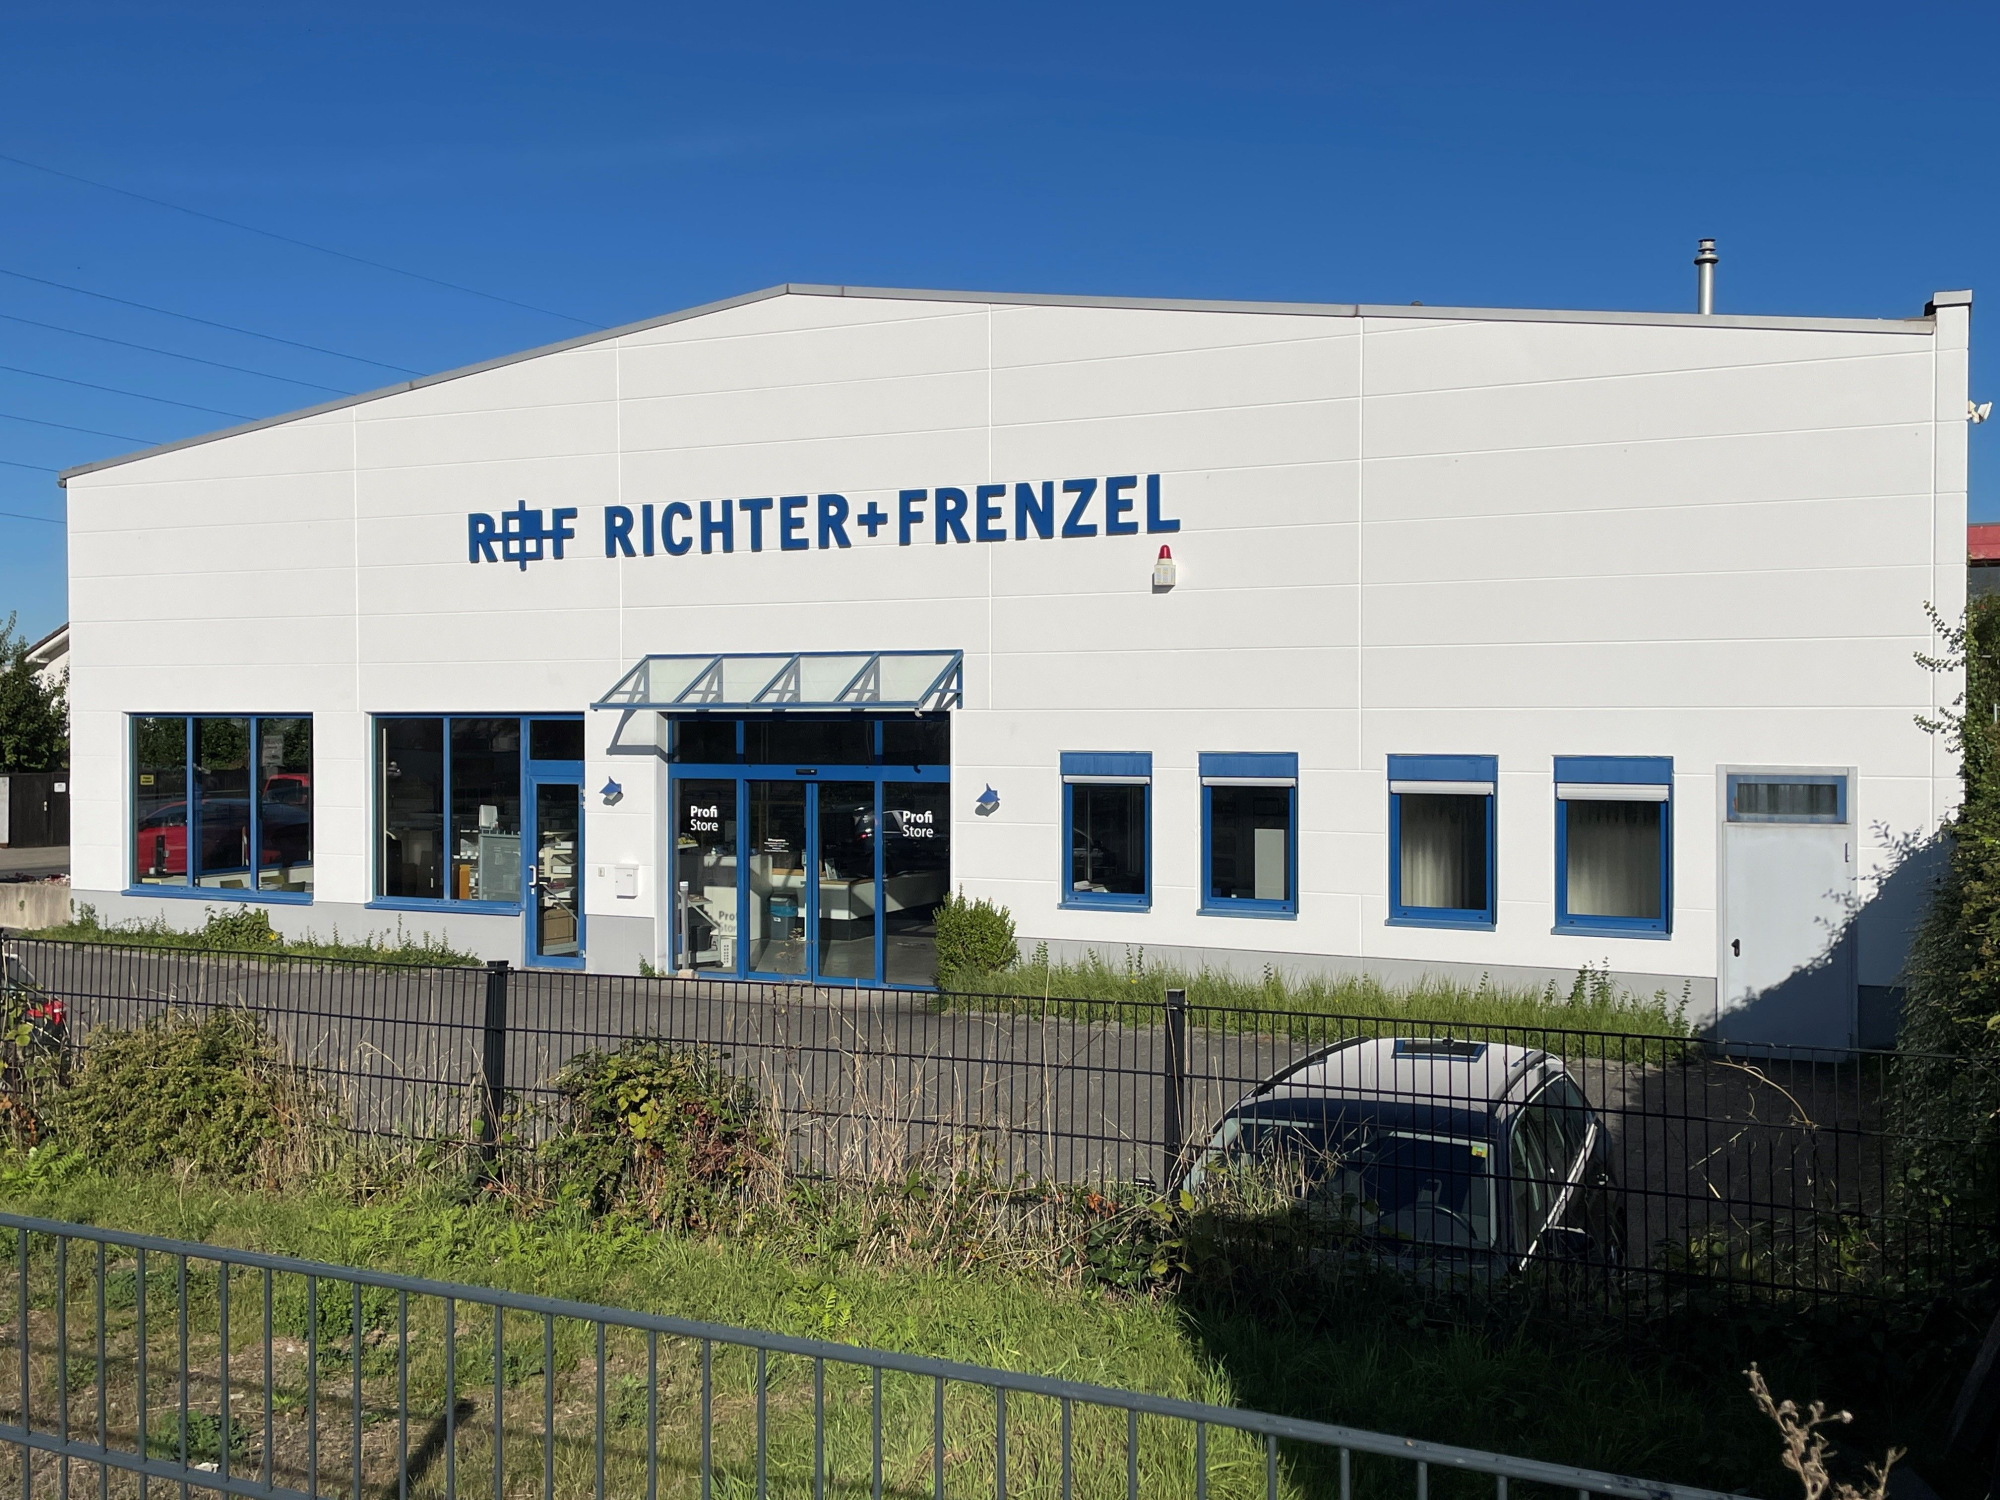 Richter+Frenzel, Alaunbachweg 27 in Bonn